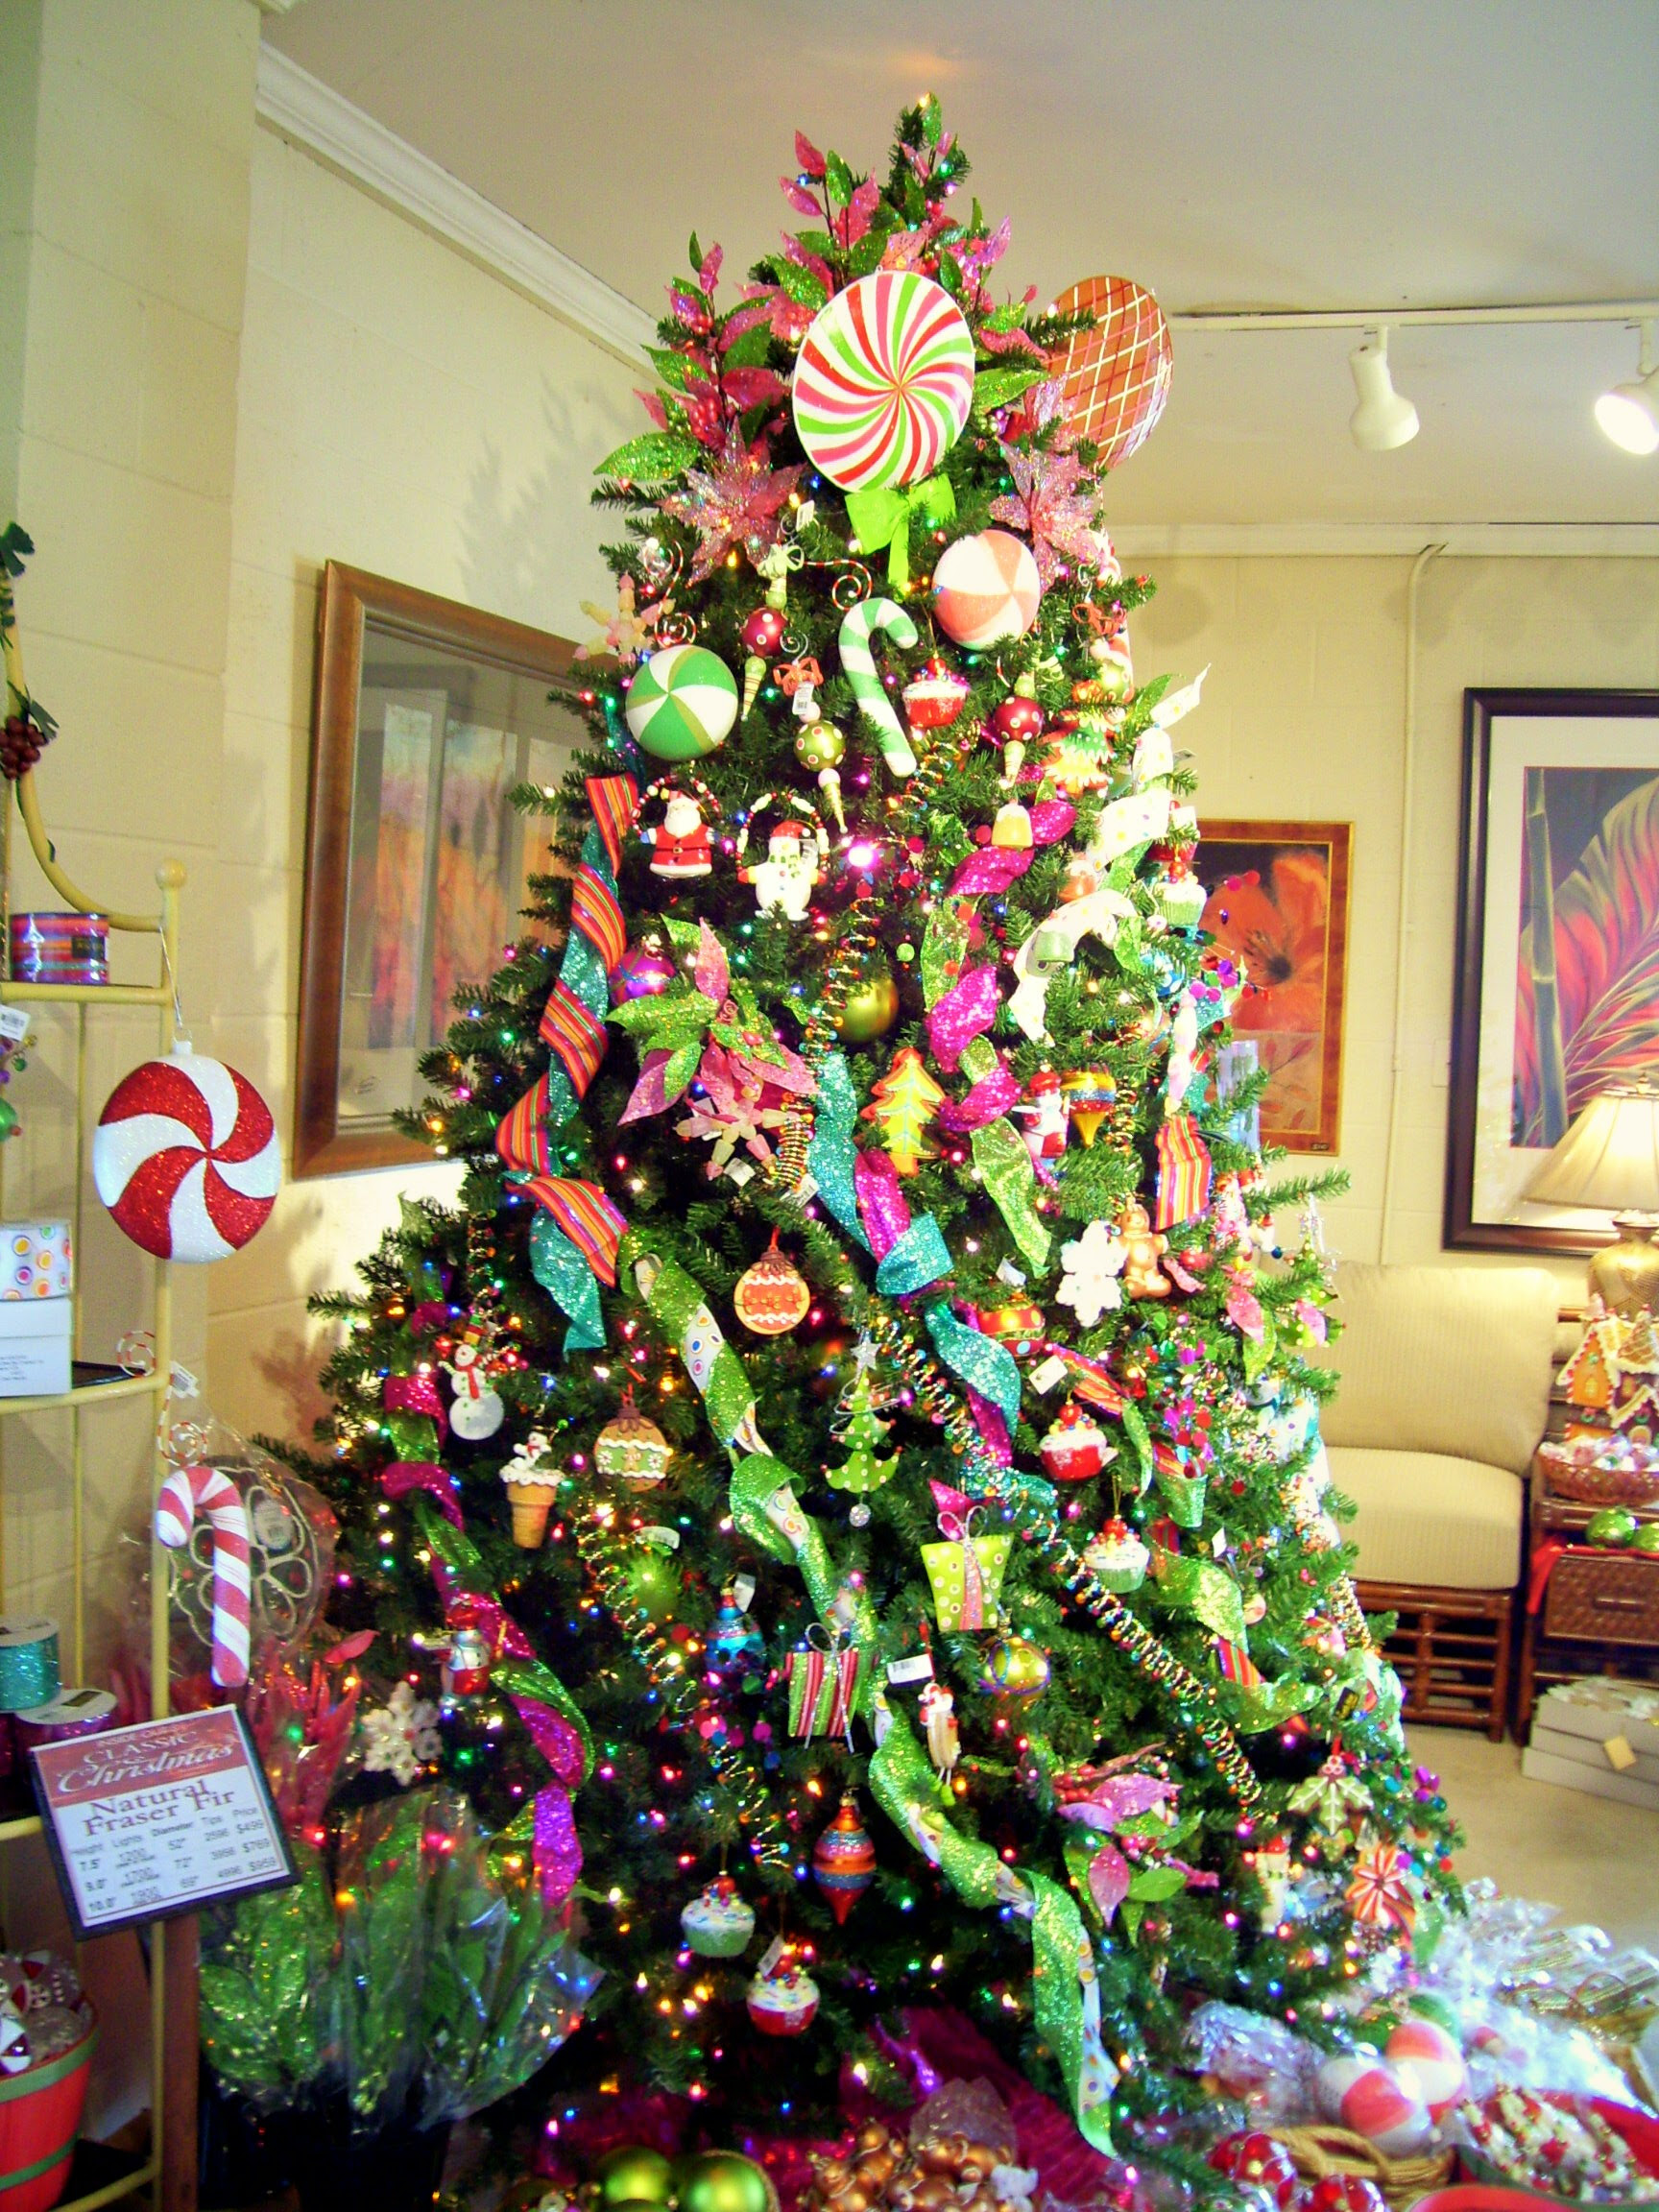 http://brentwood.thefuntimesguide.com/images/blogs/sugarplum-christmas-tree-decorating-ideas.jpg